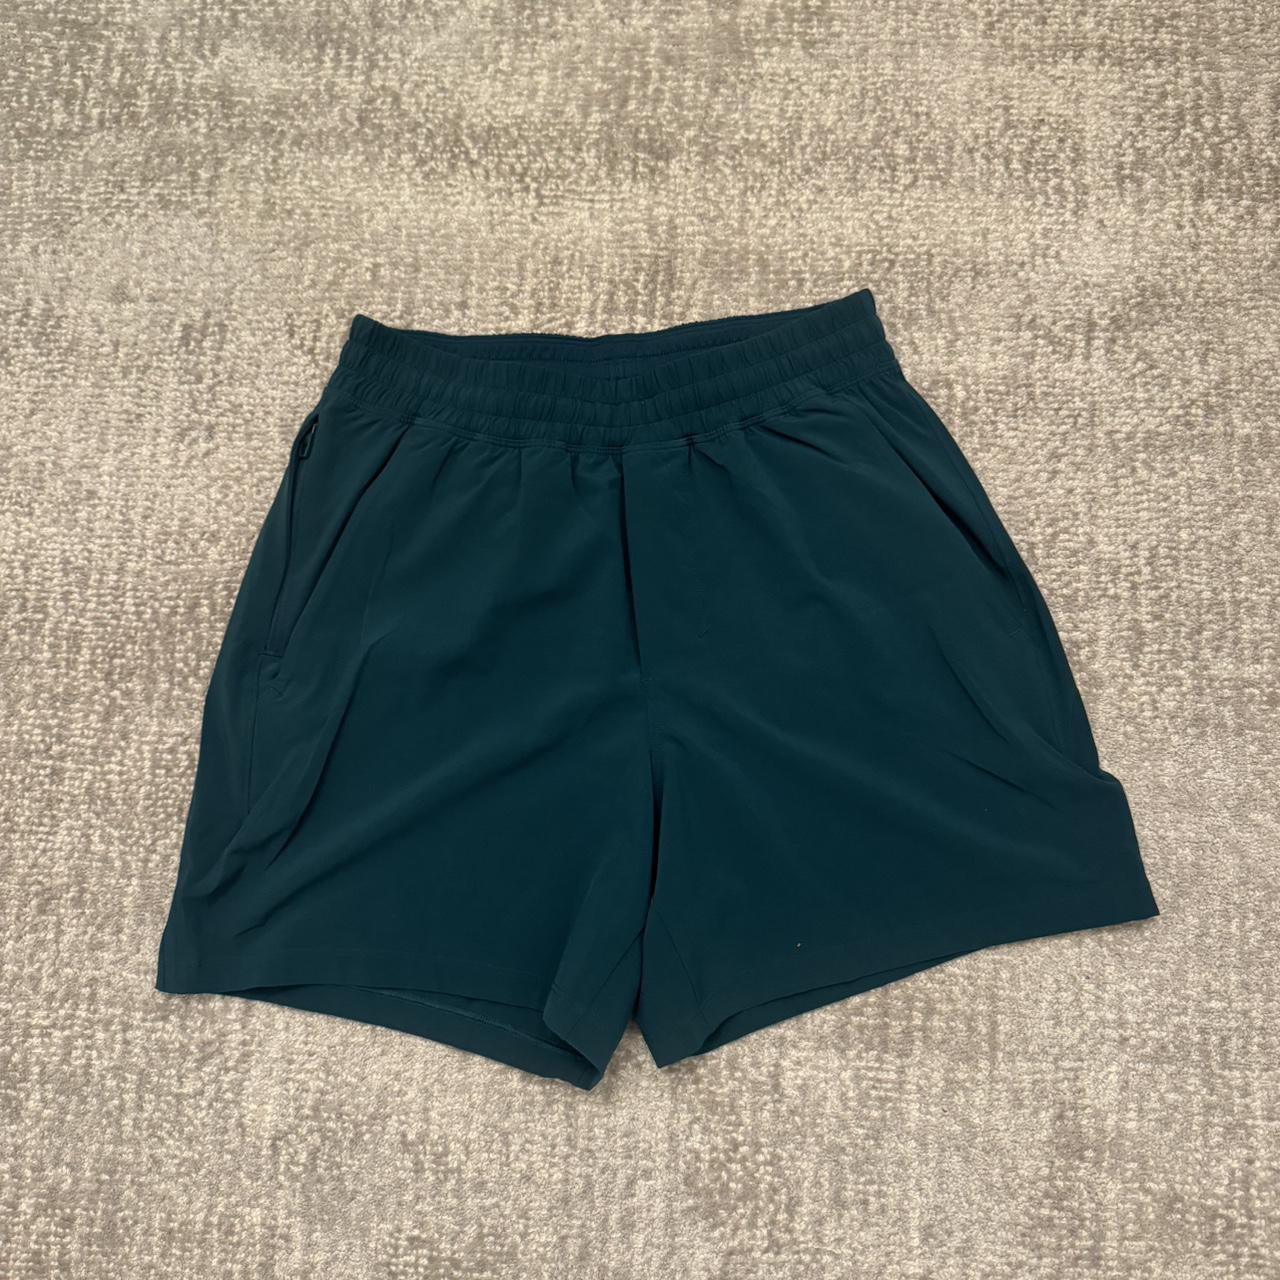 Men's medium green ALPHALETE shorts - Depop